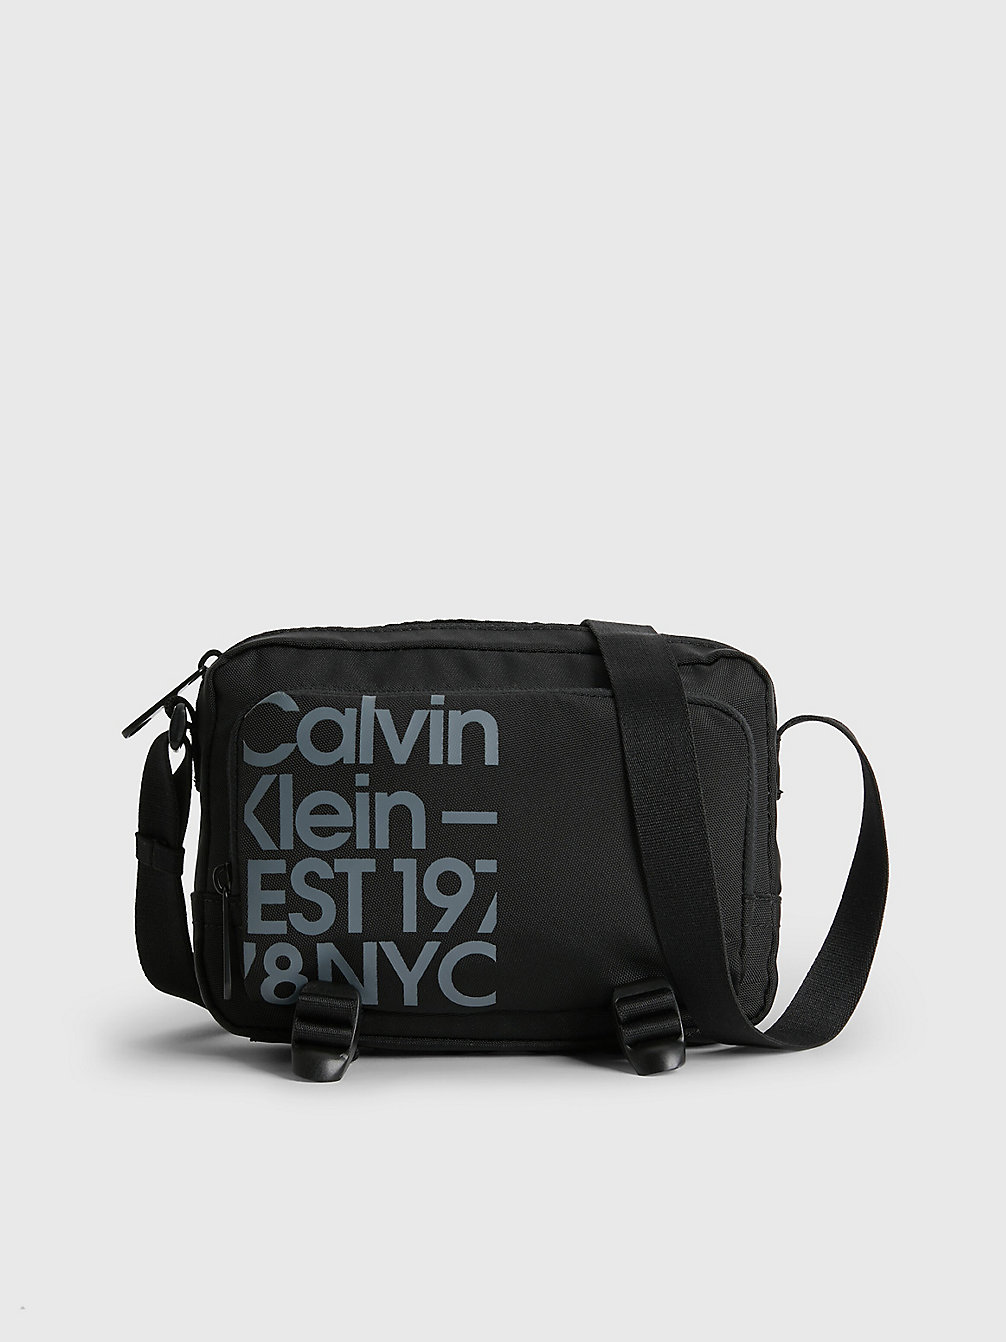 BLACK / OVERCAST GREY PRINT Recycled Crossbody Bag undefined men Calvin Klein